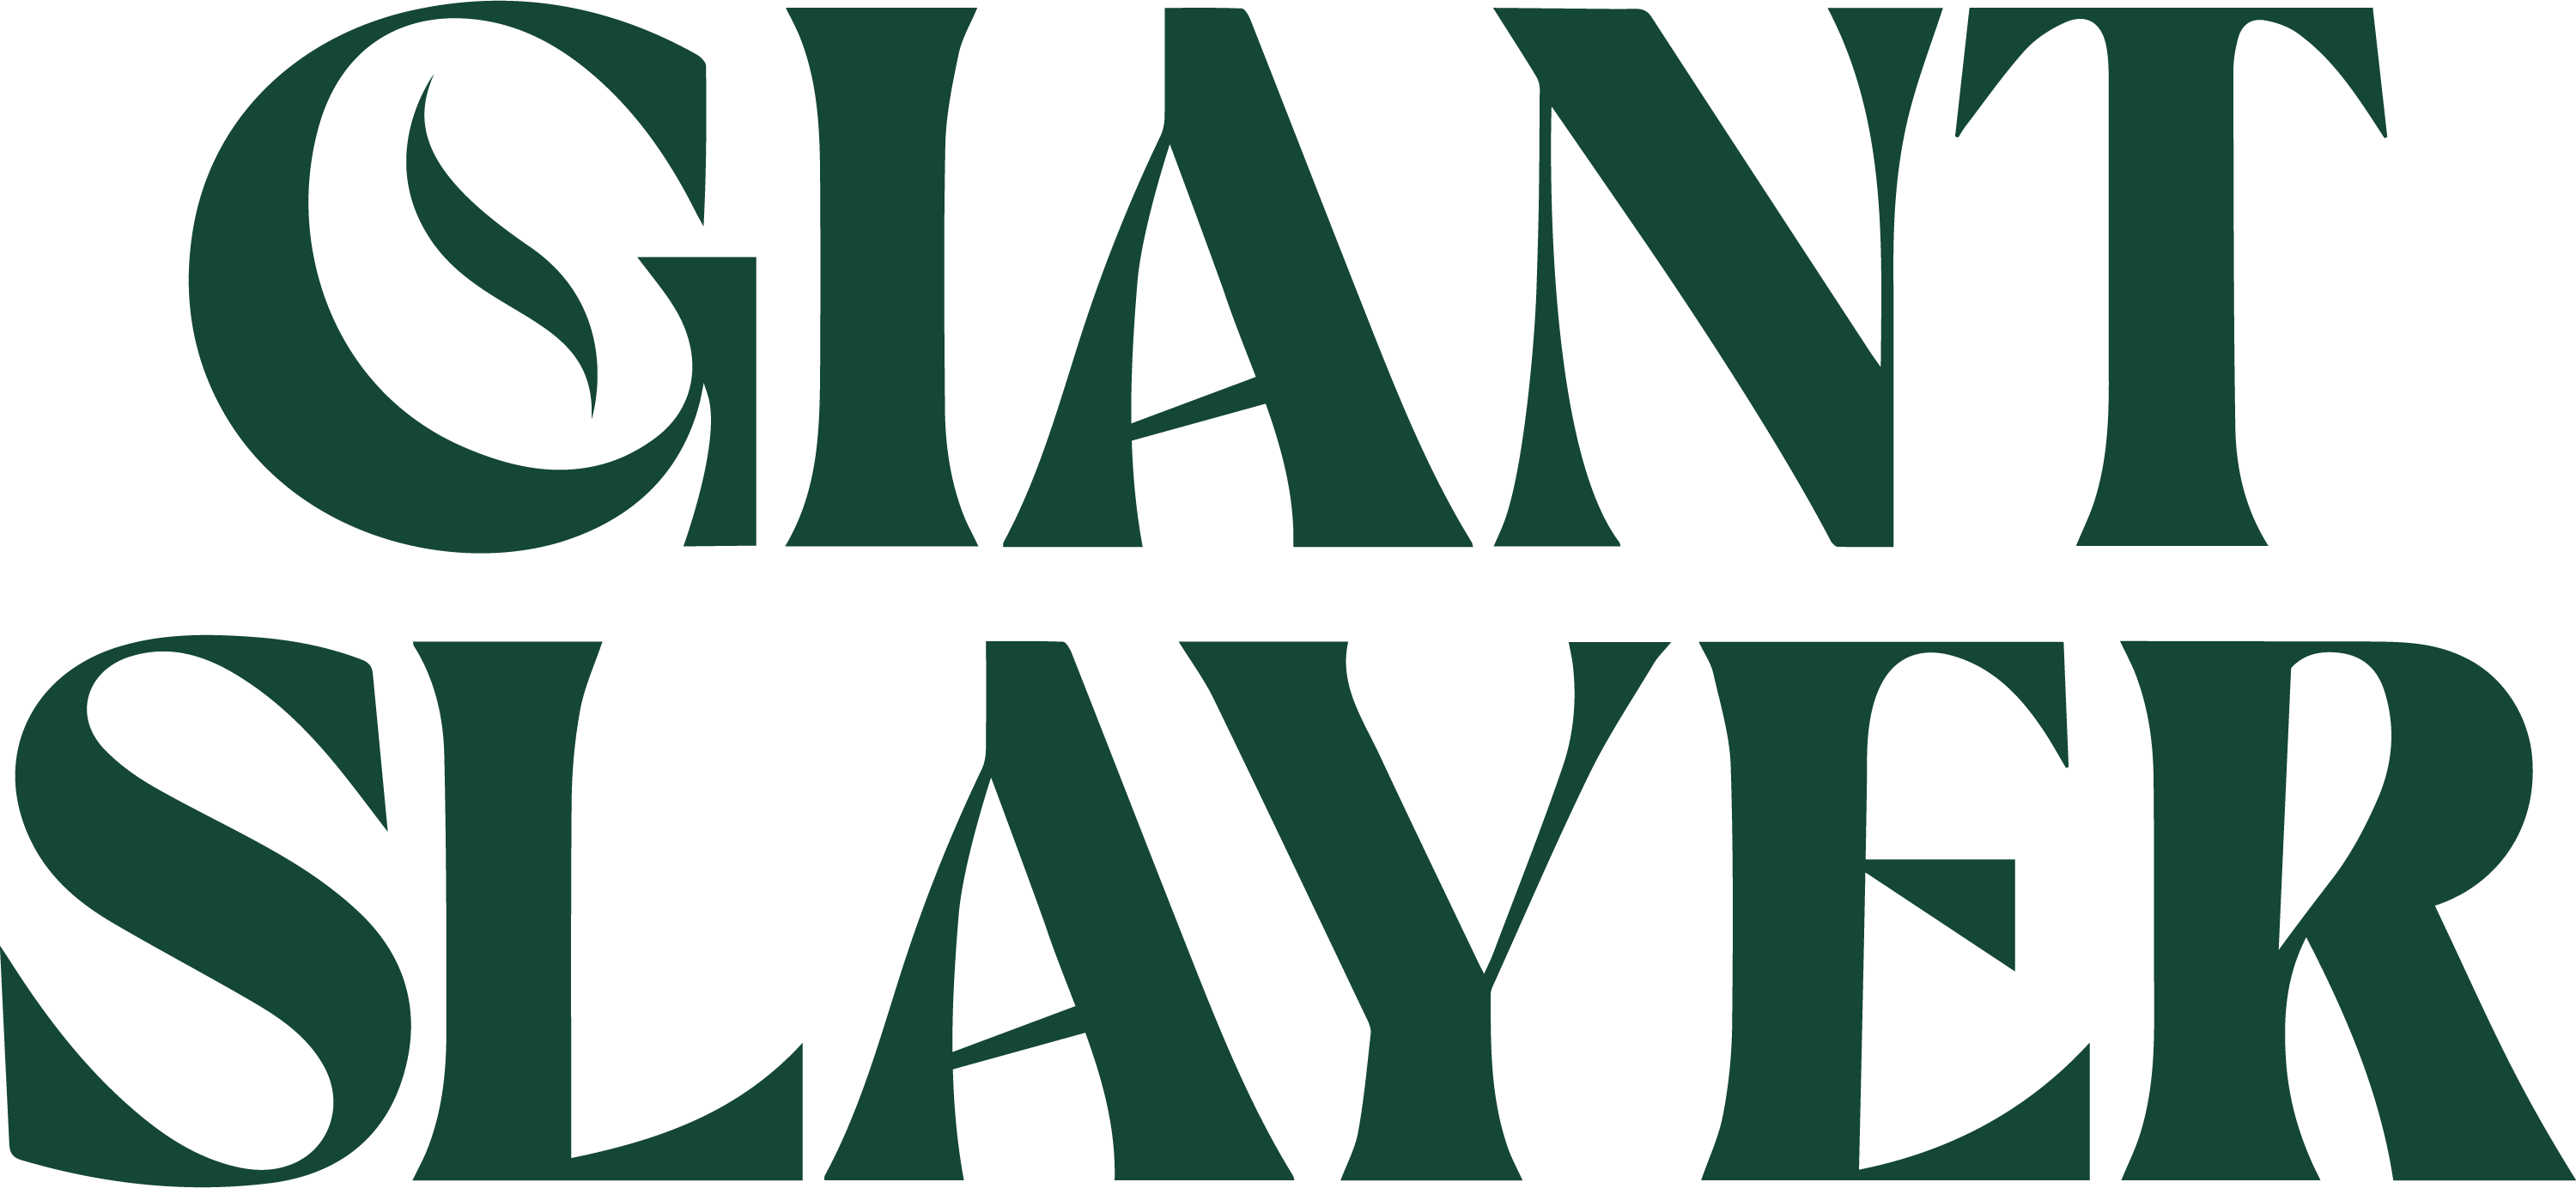 Giant Slayer Coffee Company